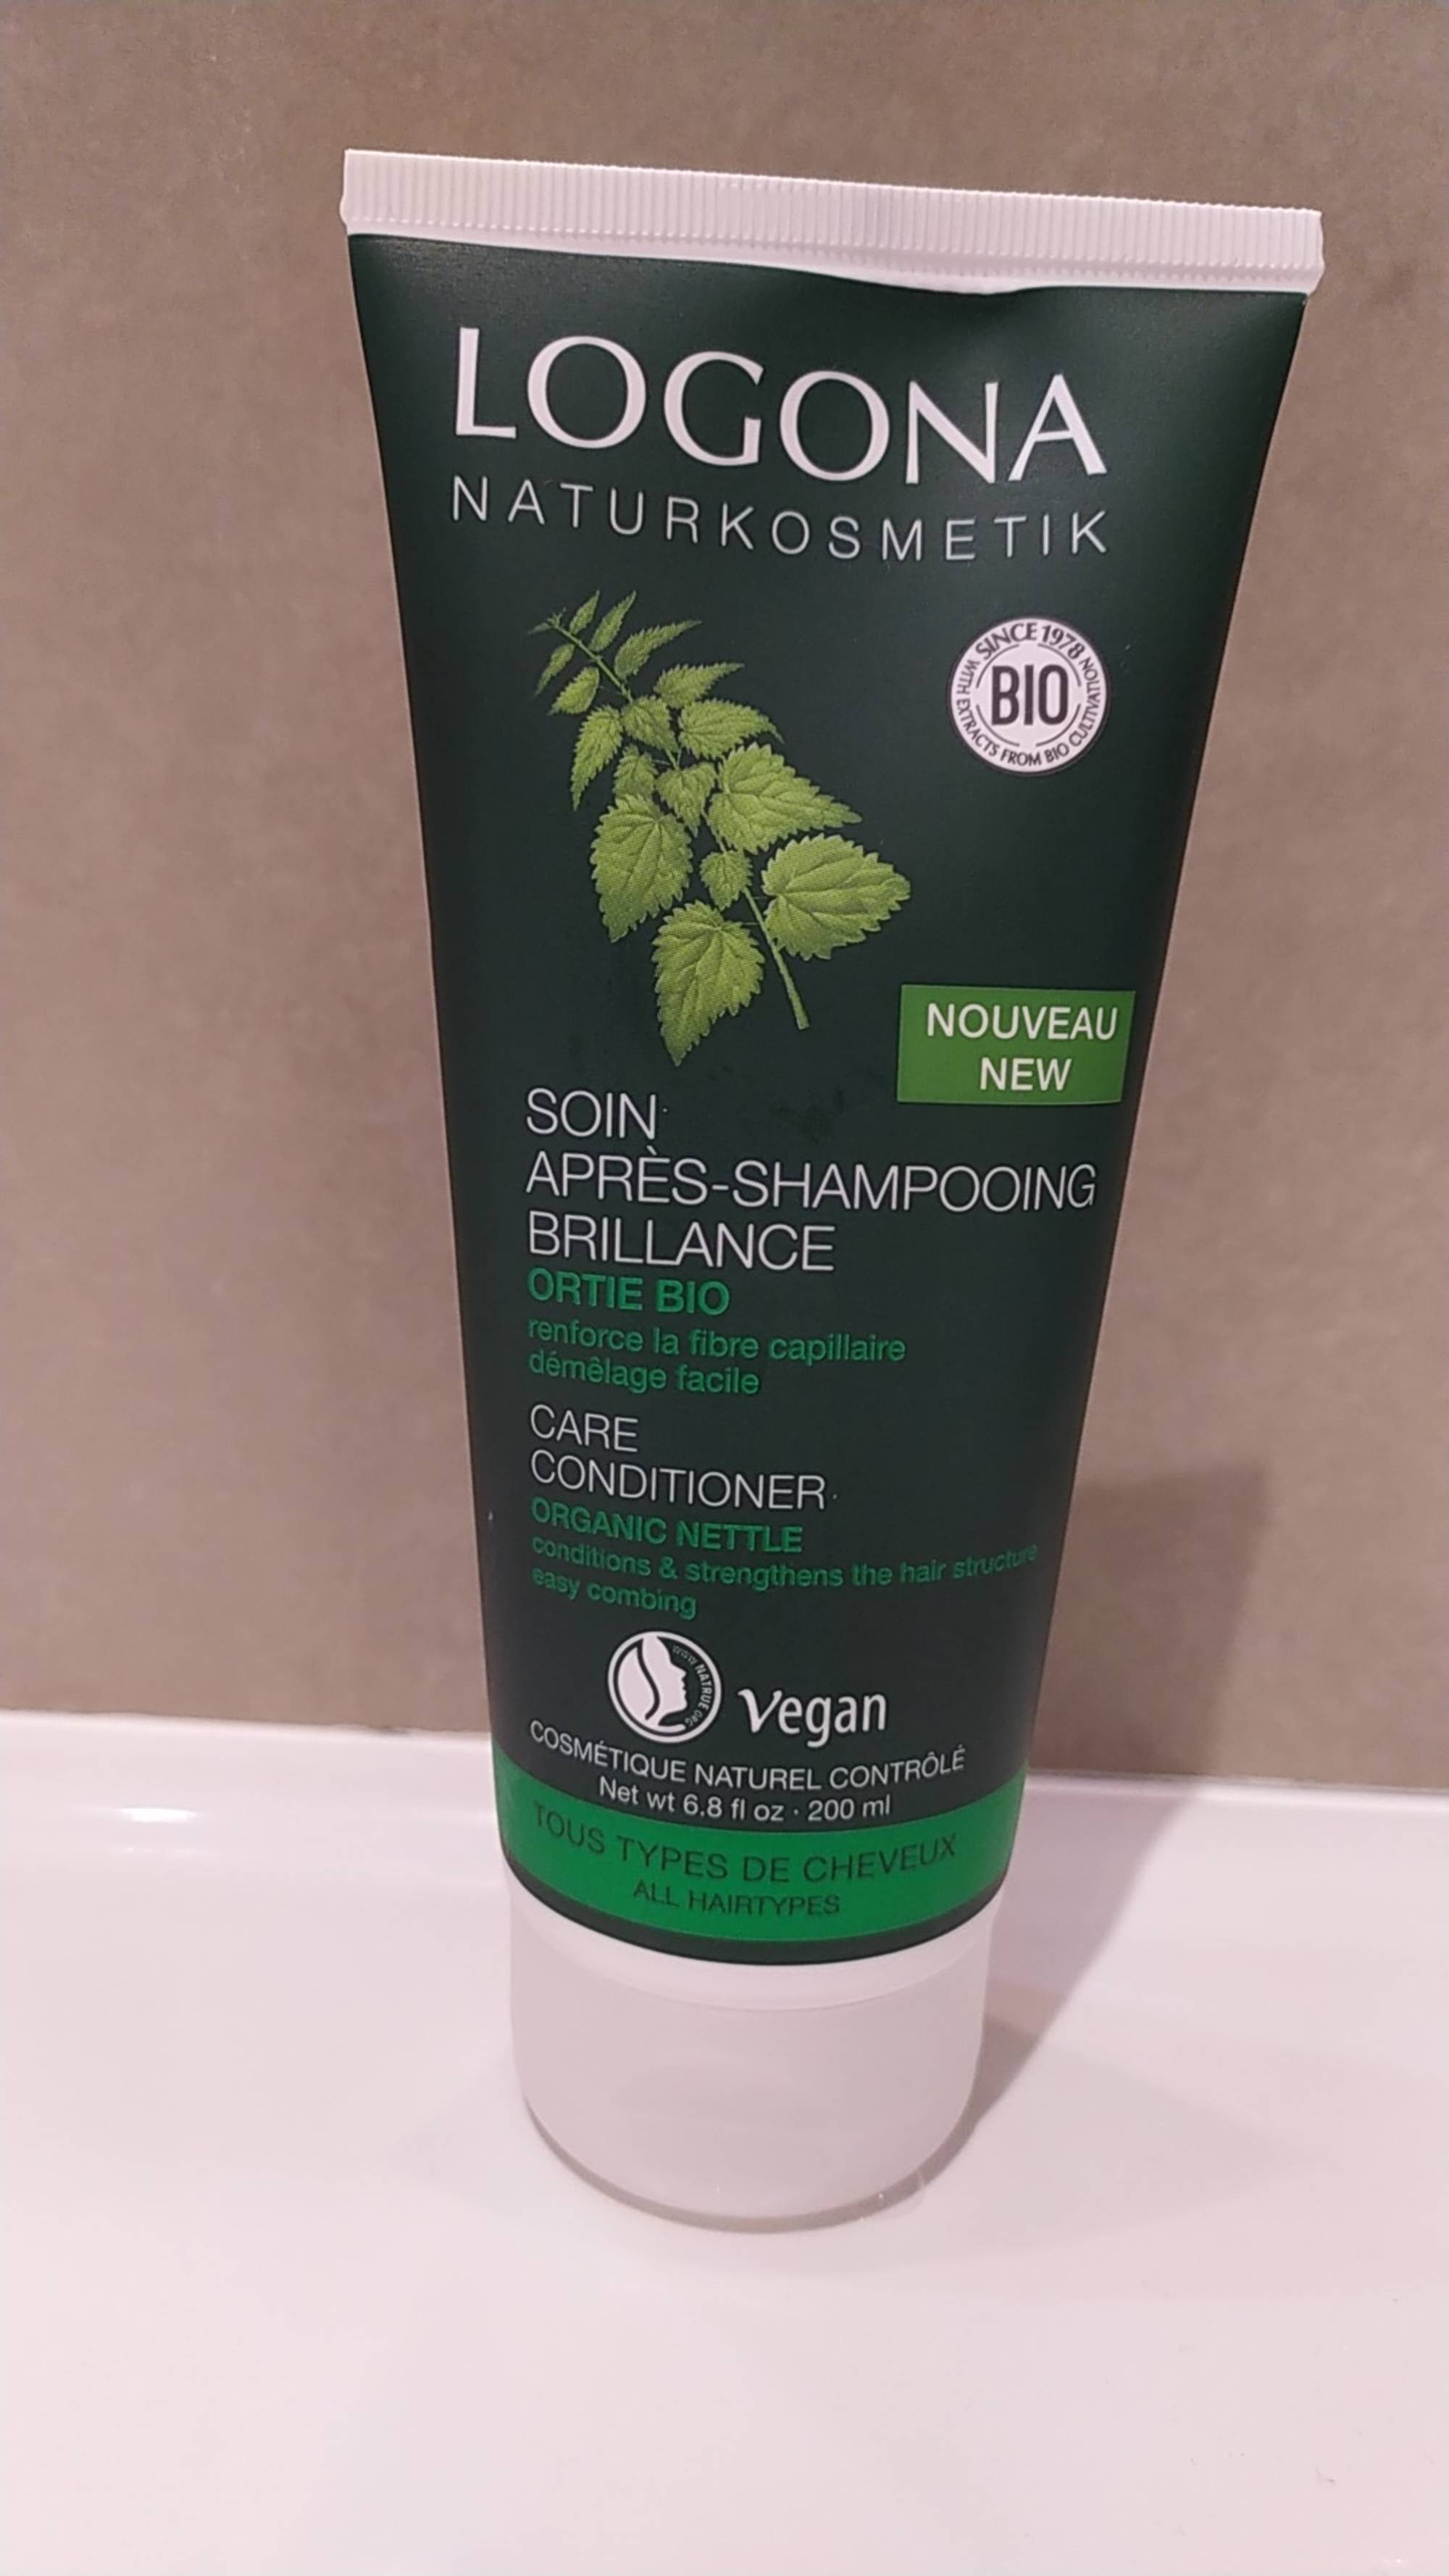 LOGONA - Ortie bio - Soin après-shampooing brillance